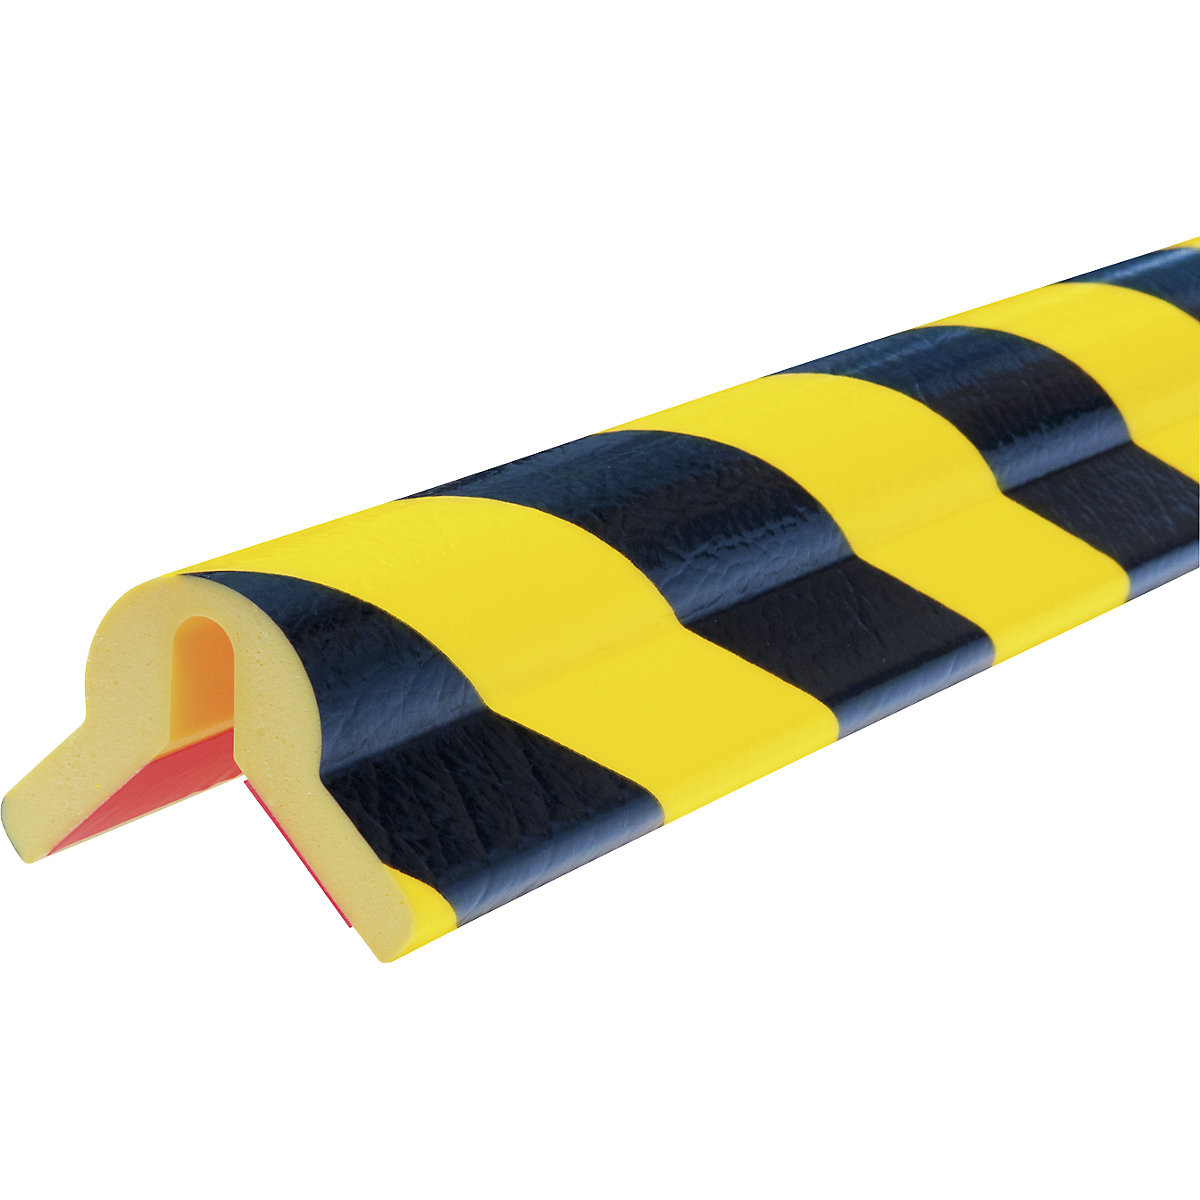 Proteção de cantos Knuffi® – SHG, tipo Y, unidade de 1 m, preto/amarelo-11